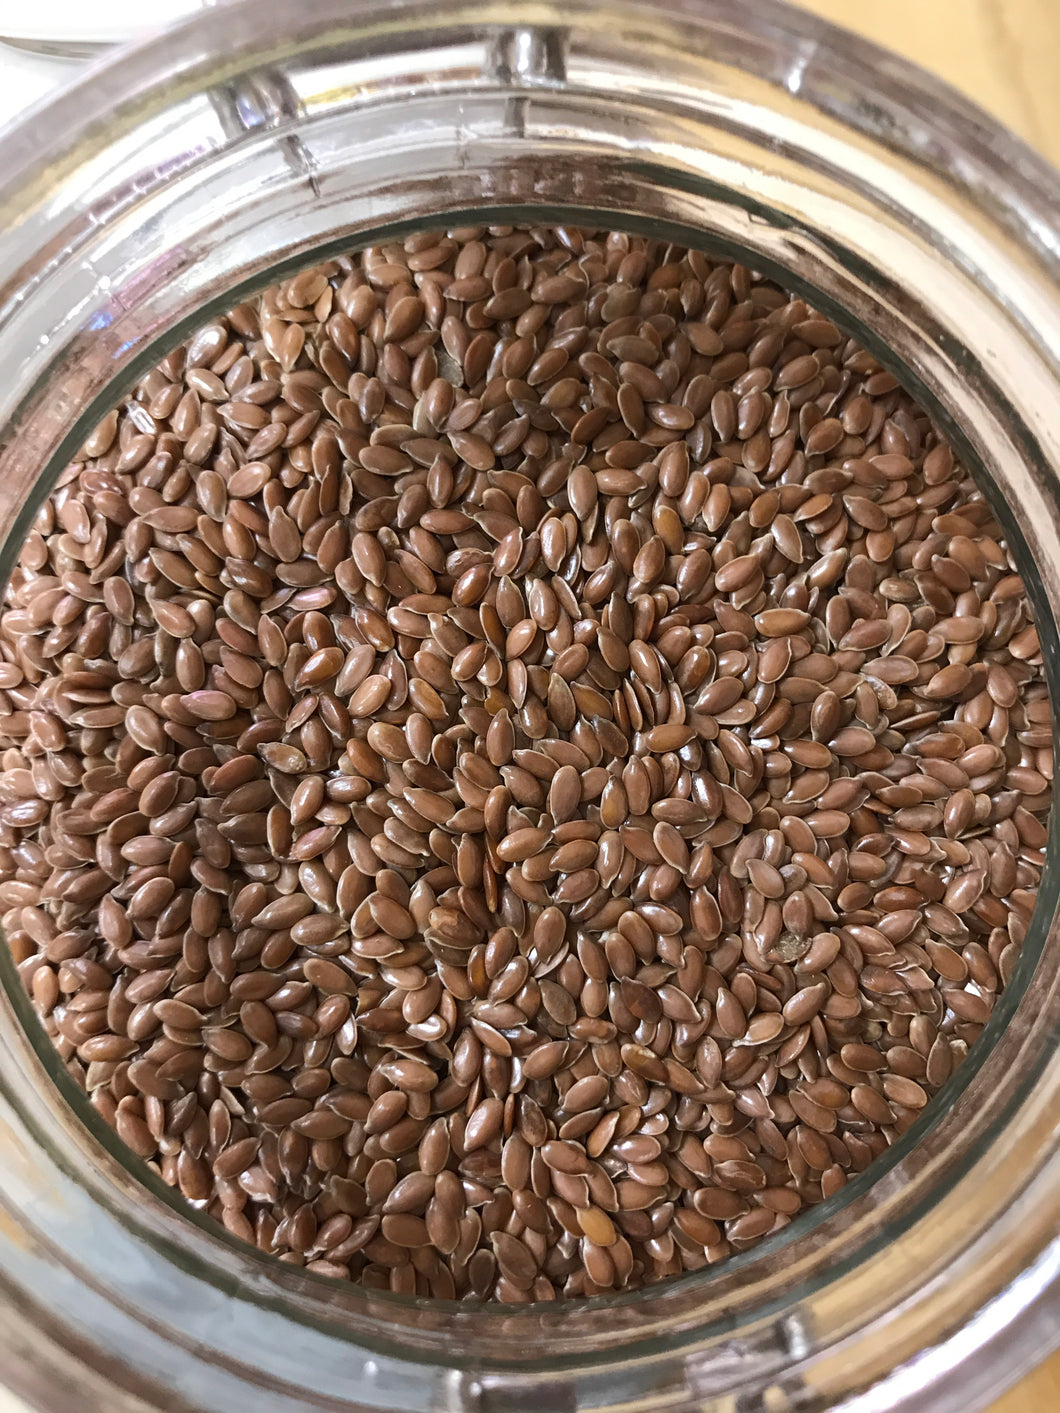 Brown Linseeds or Flaxseed